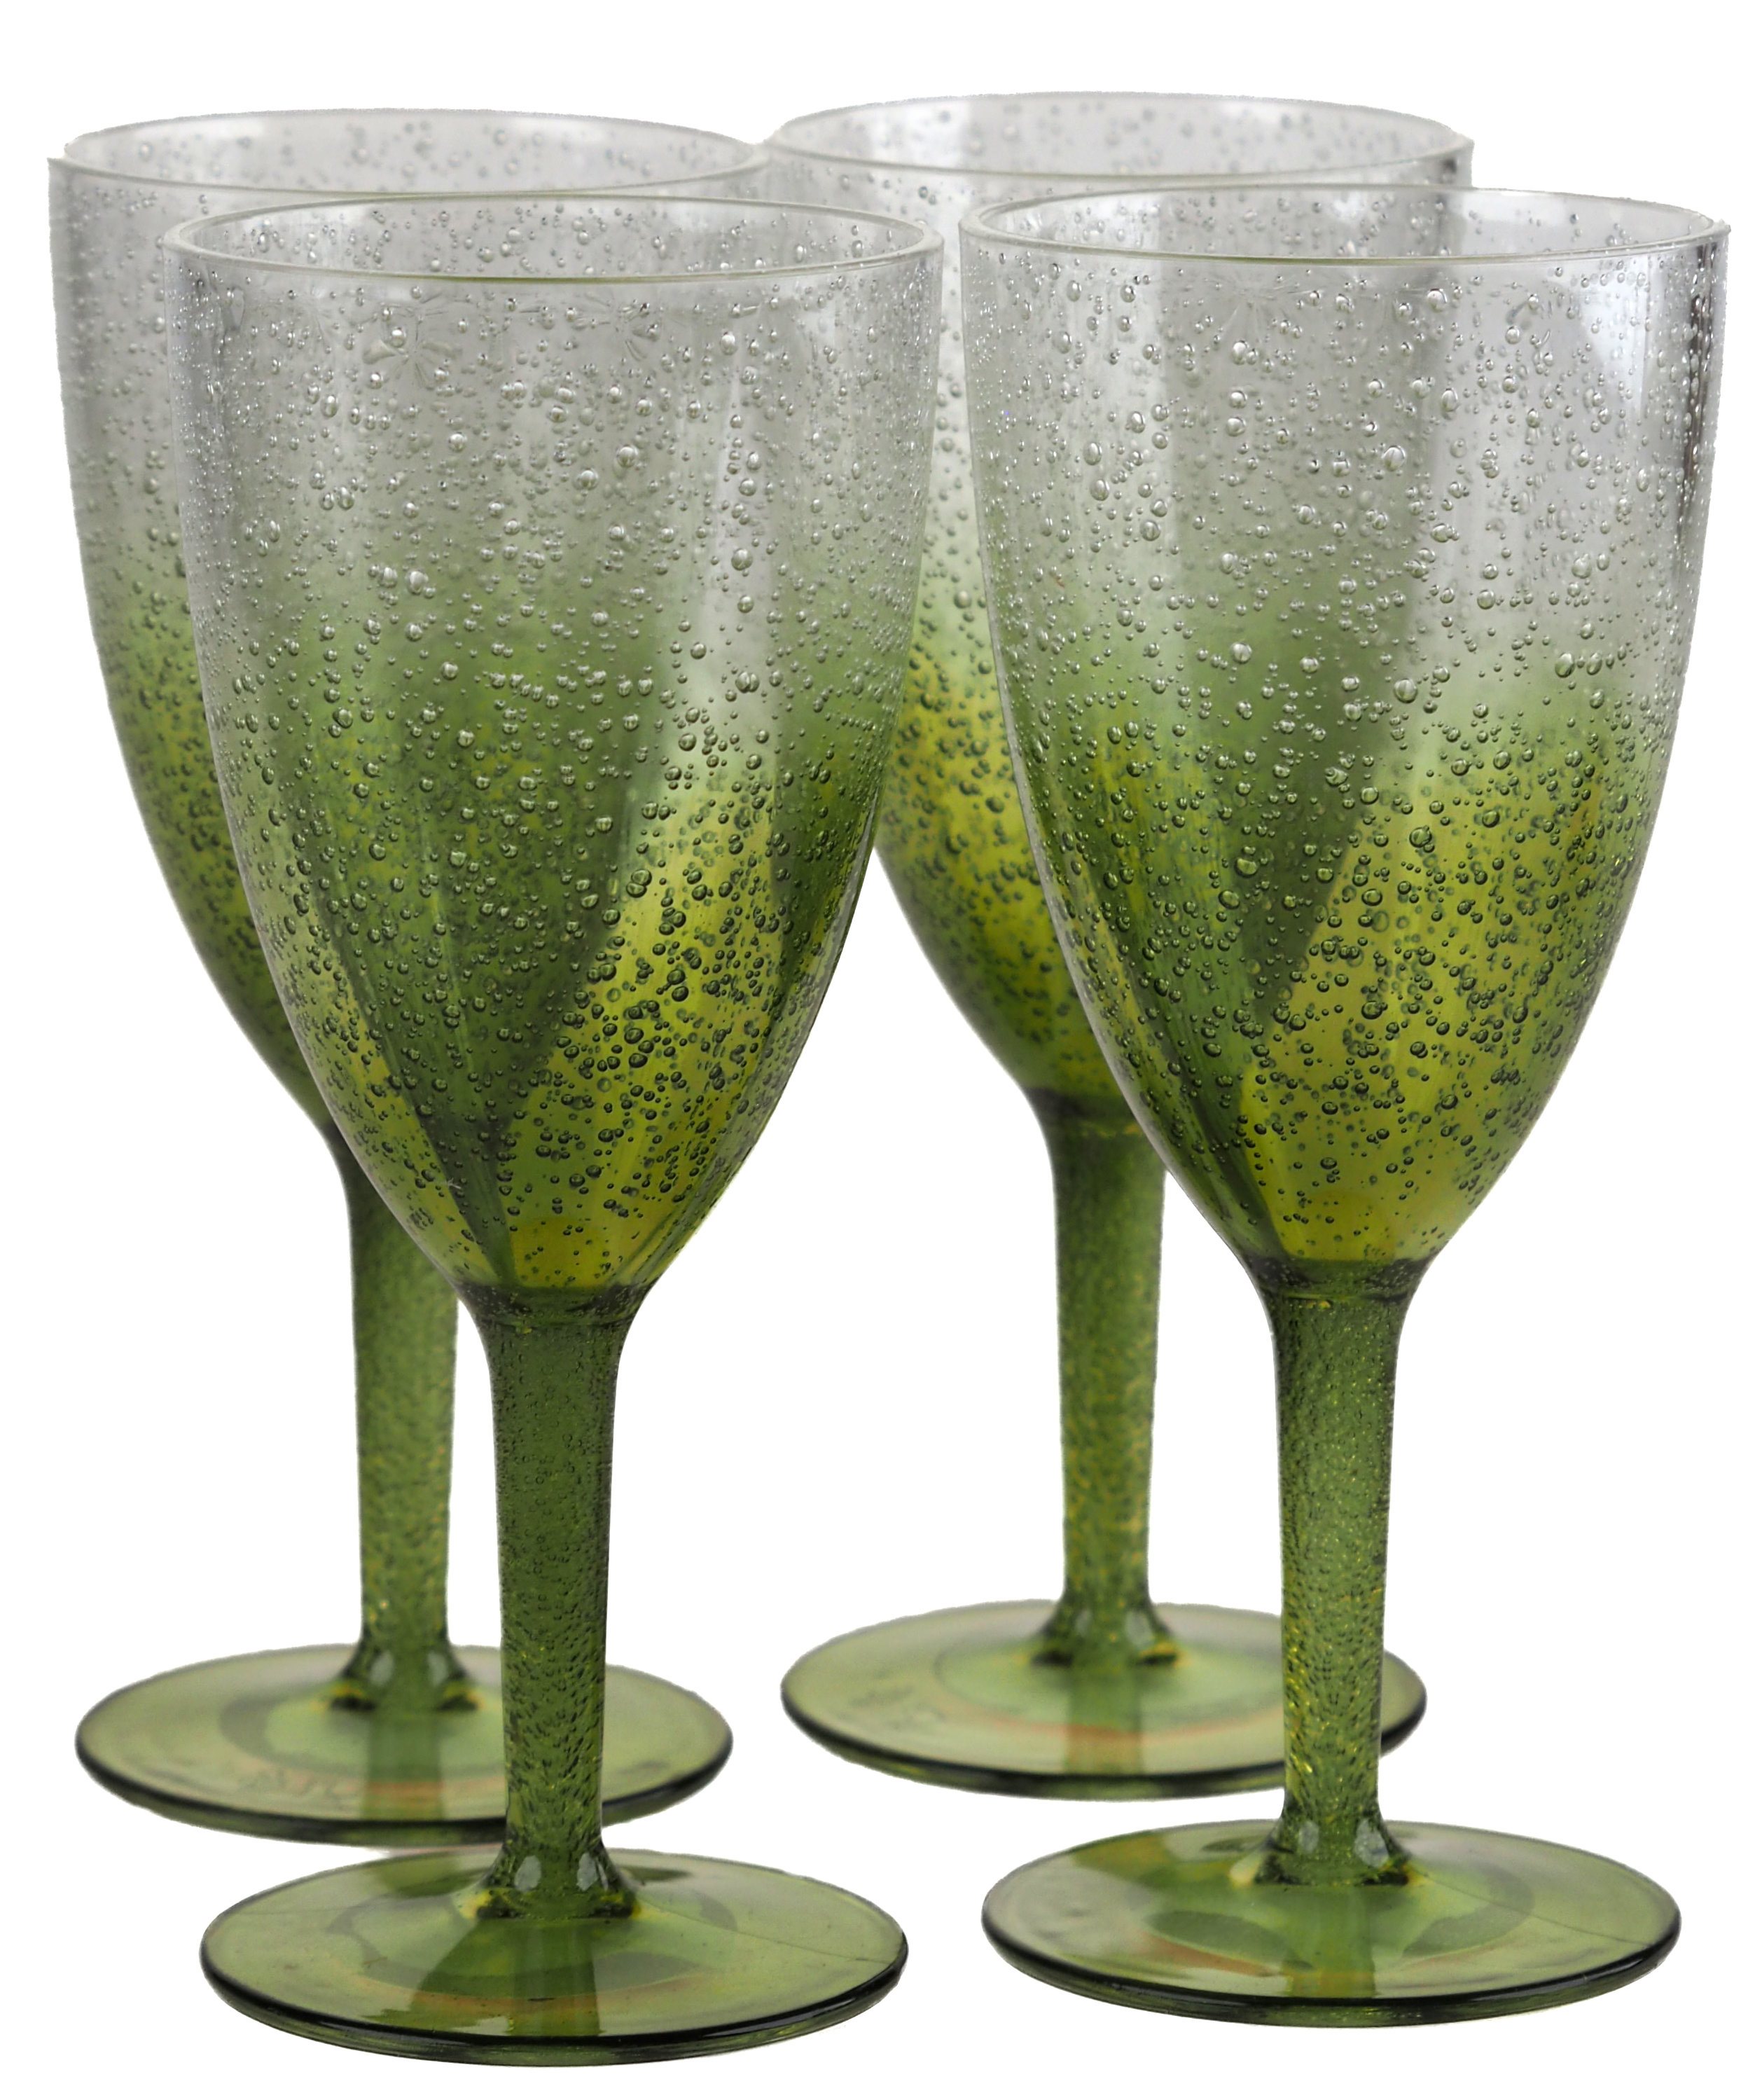 Plastic reusable Party Design Wine Glasses - Summer Green - Set of 4